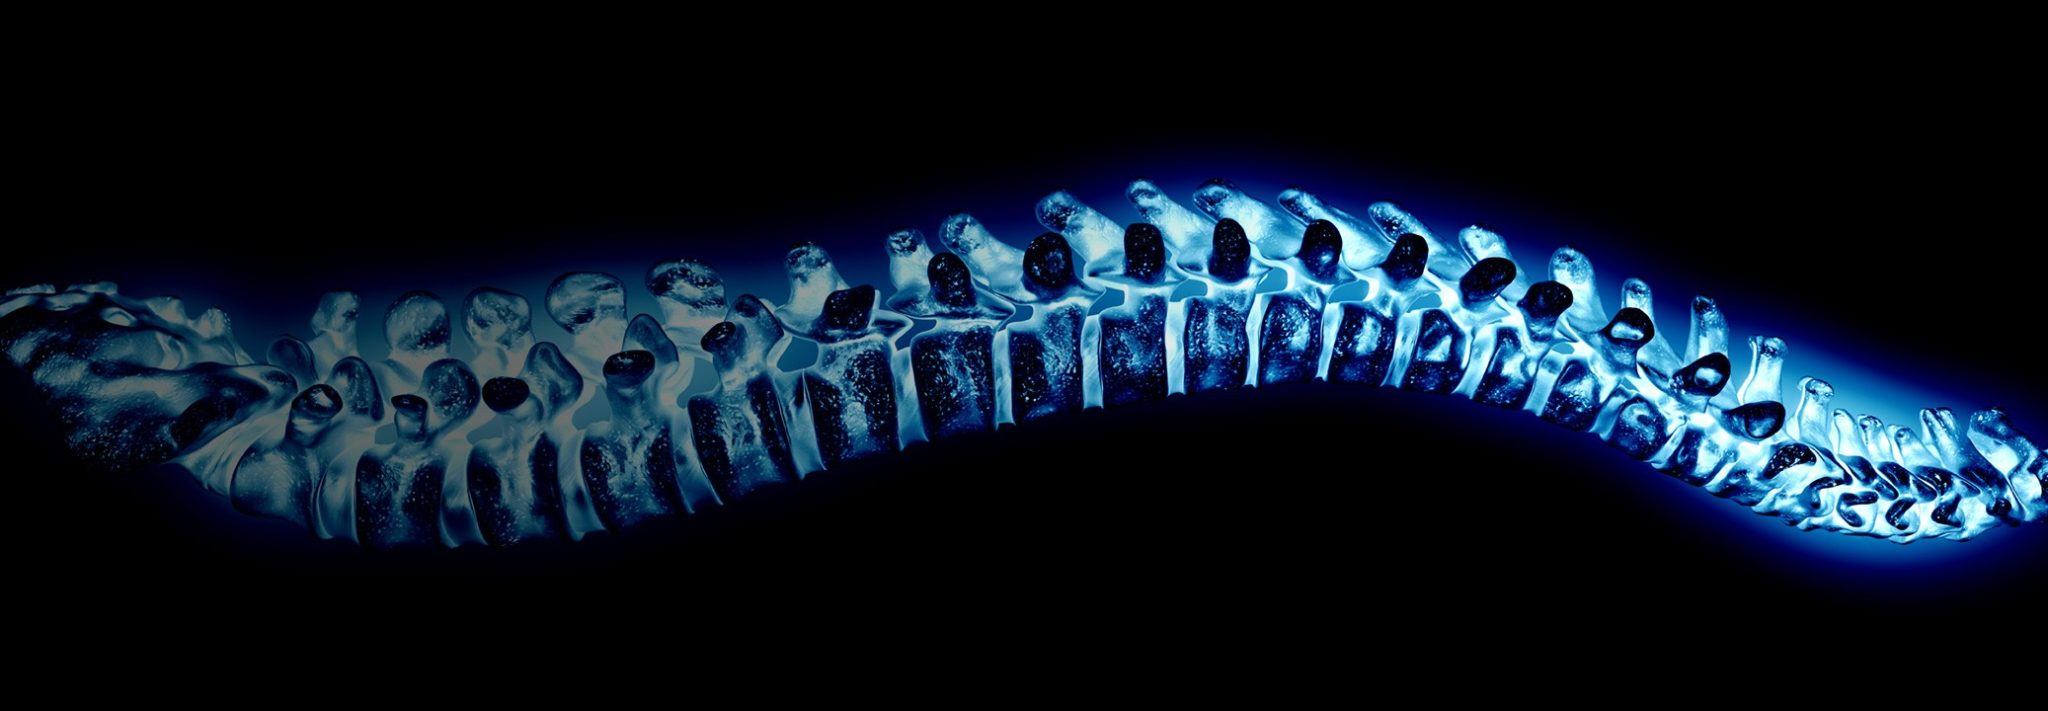 Illustration showing the vertebrae of the human spine